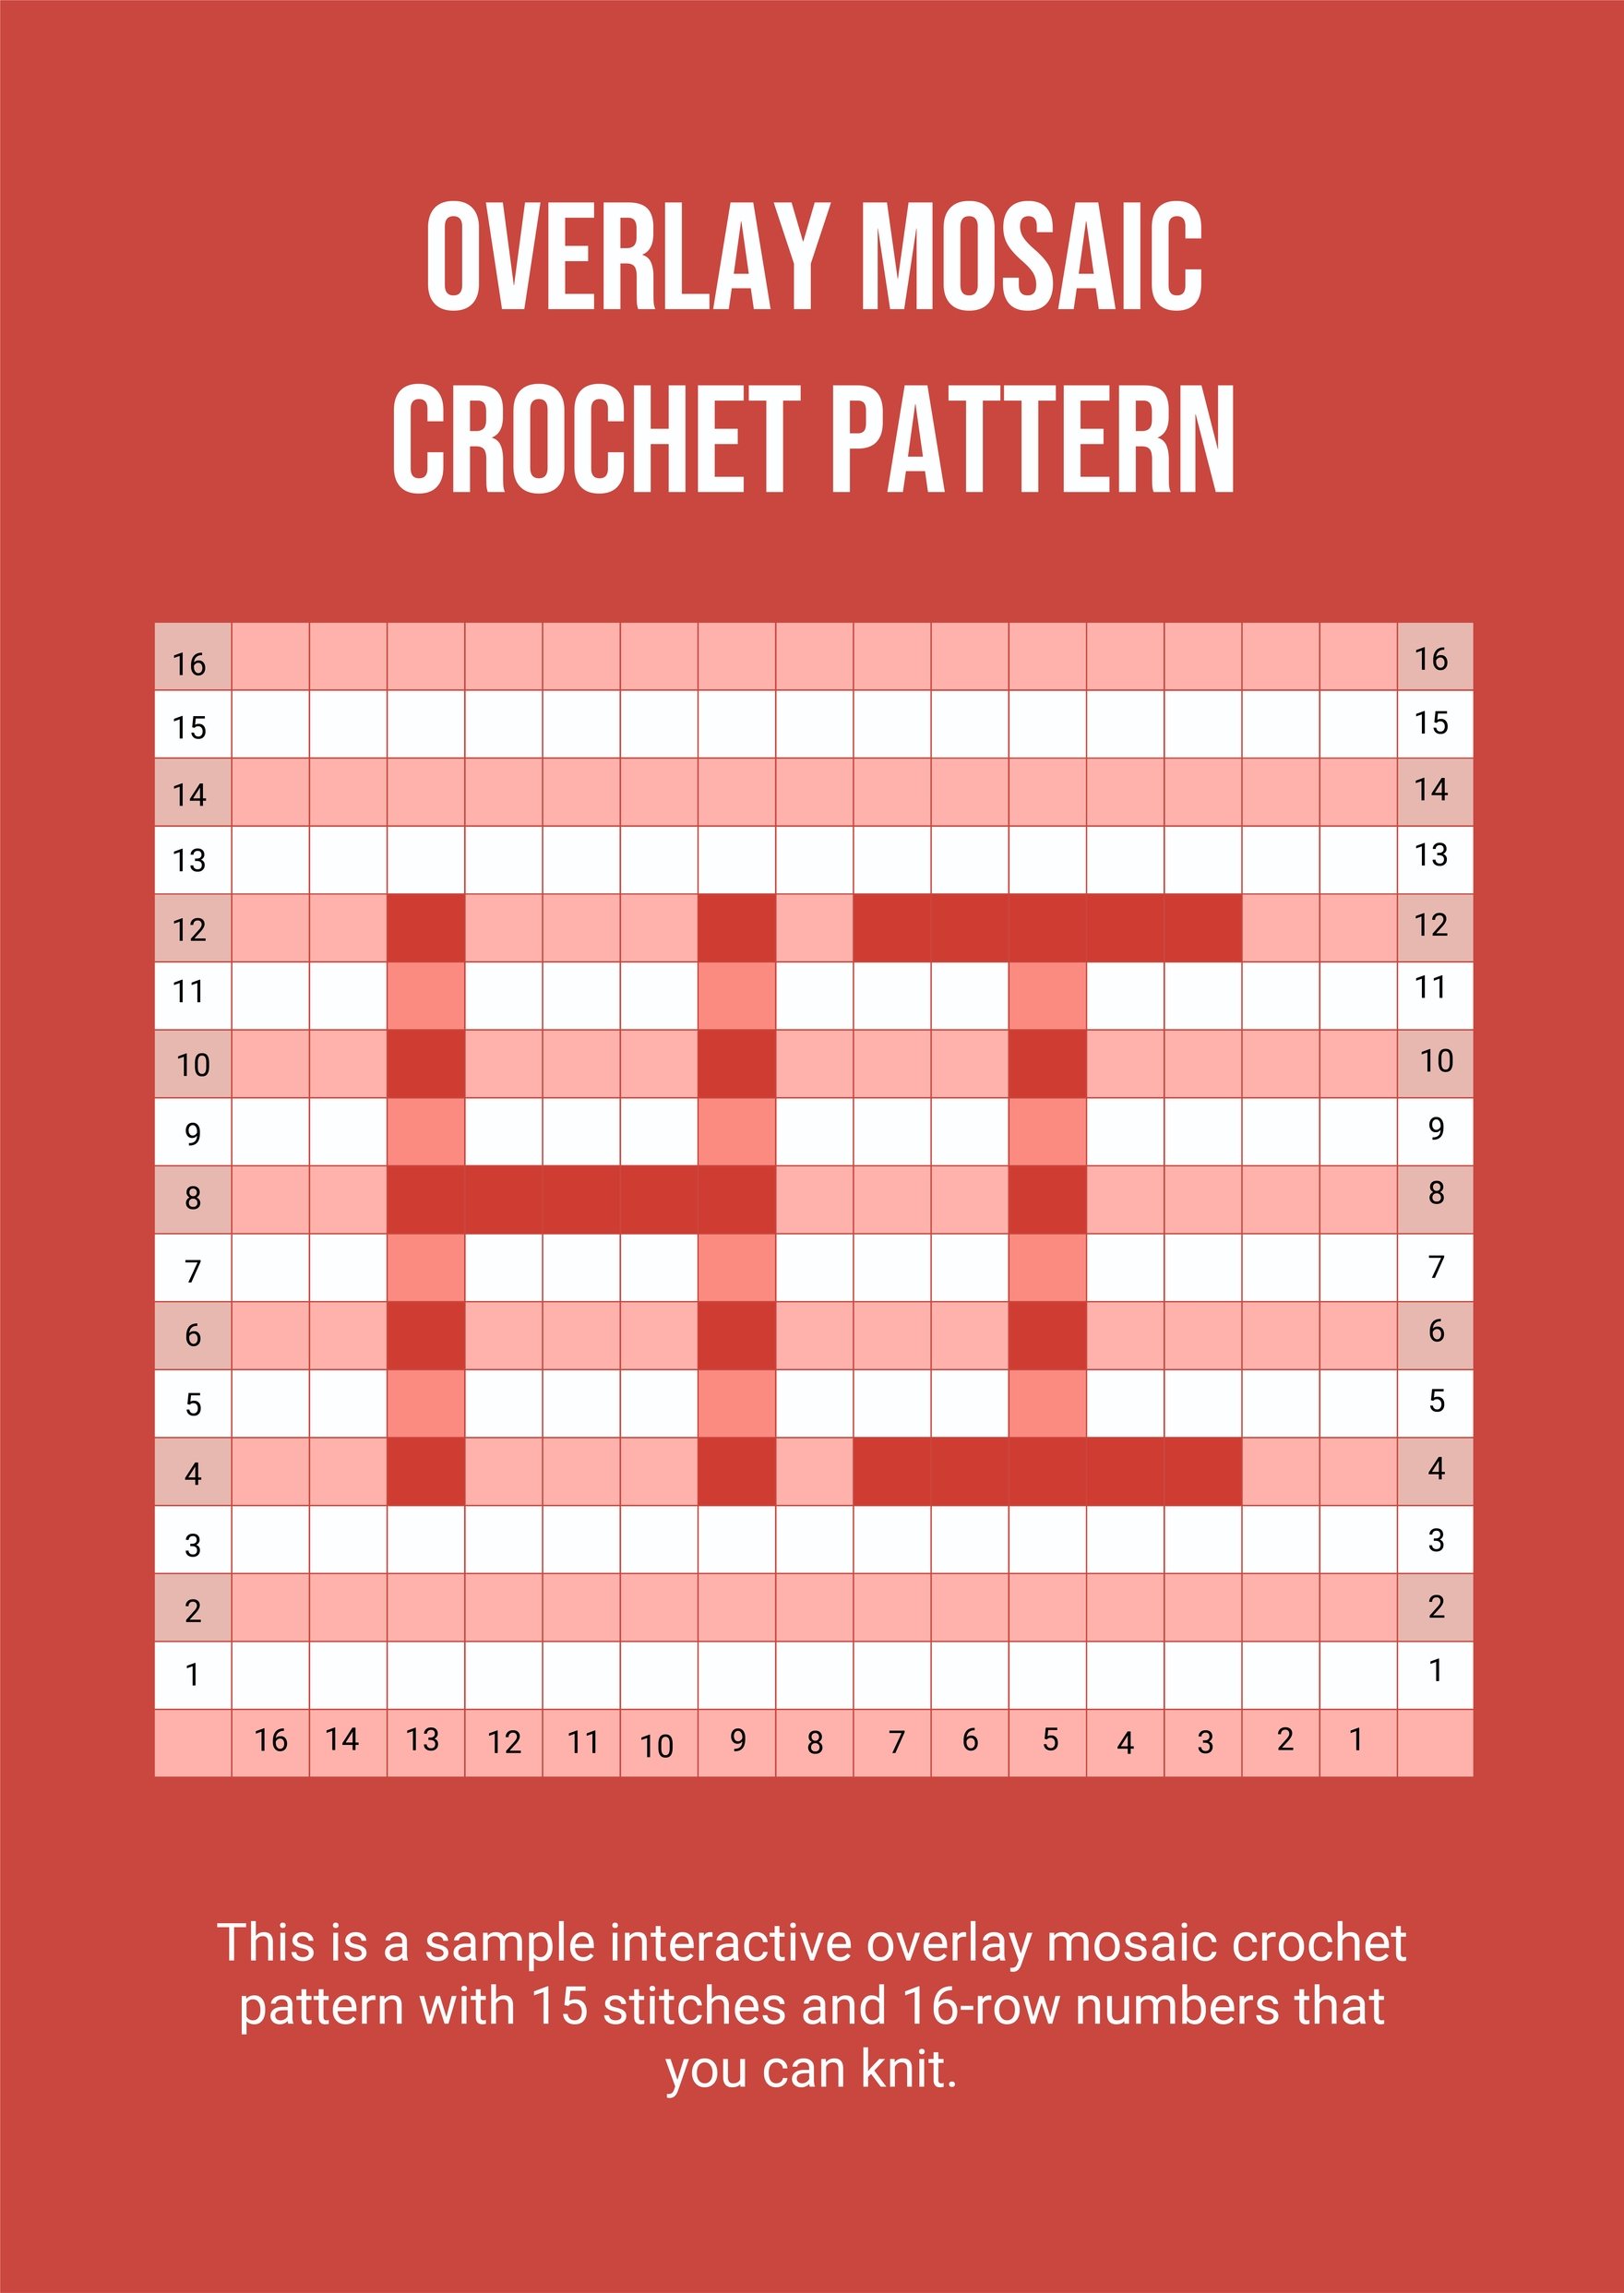 Interactive Overlay Mosaic Crochet Chart in PDF, Illustrator